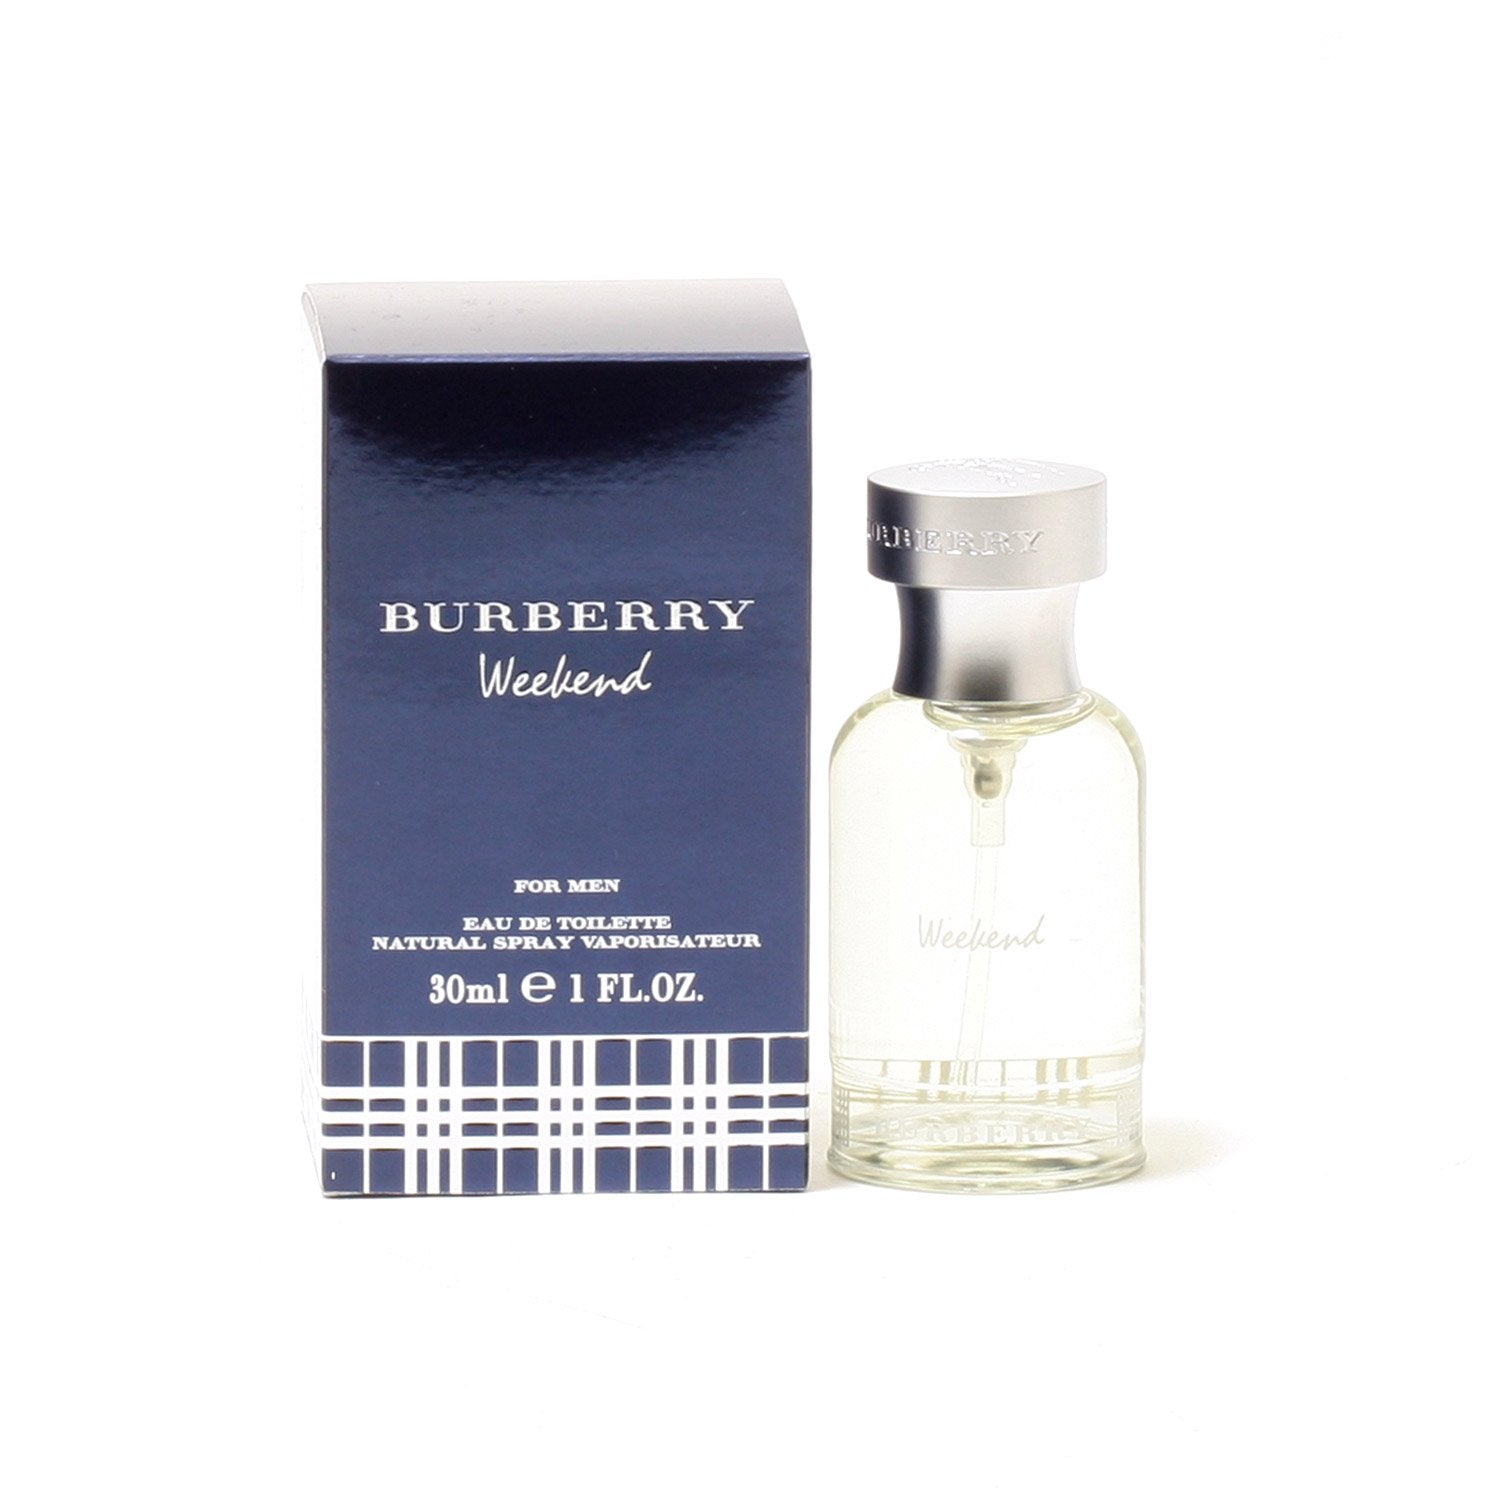 BURBERRY WEEKEND FOR MEN - EAU DE TOILETTE SPRAY – Fragrance Room